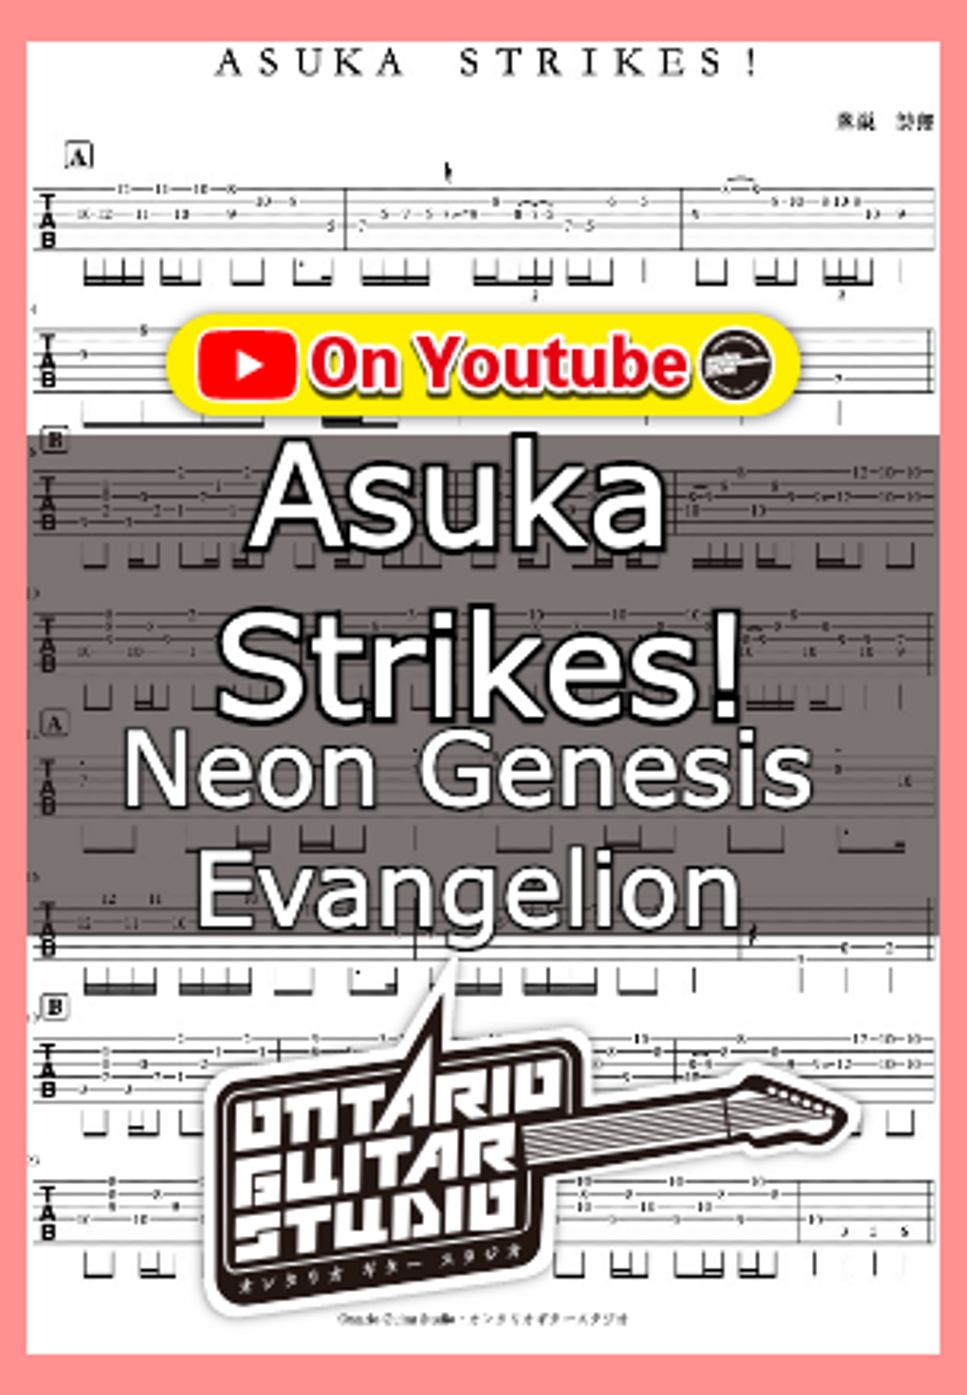 Neon Genesis Evangelion - Asuka Strikes by Ontario Guitar Studio